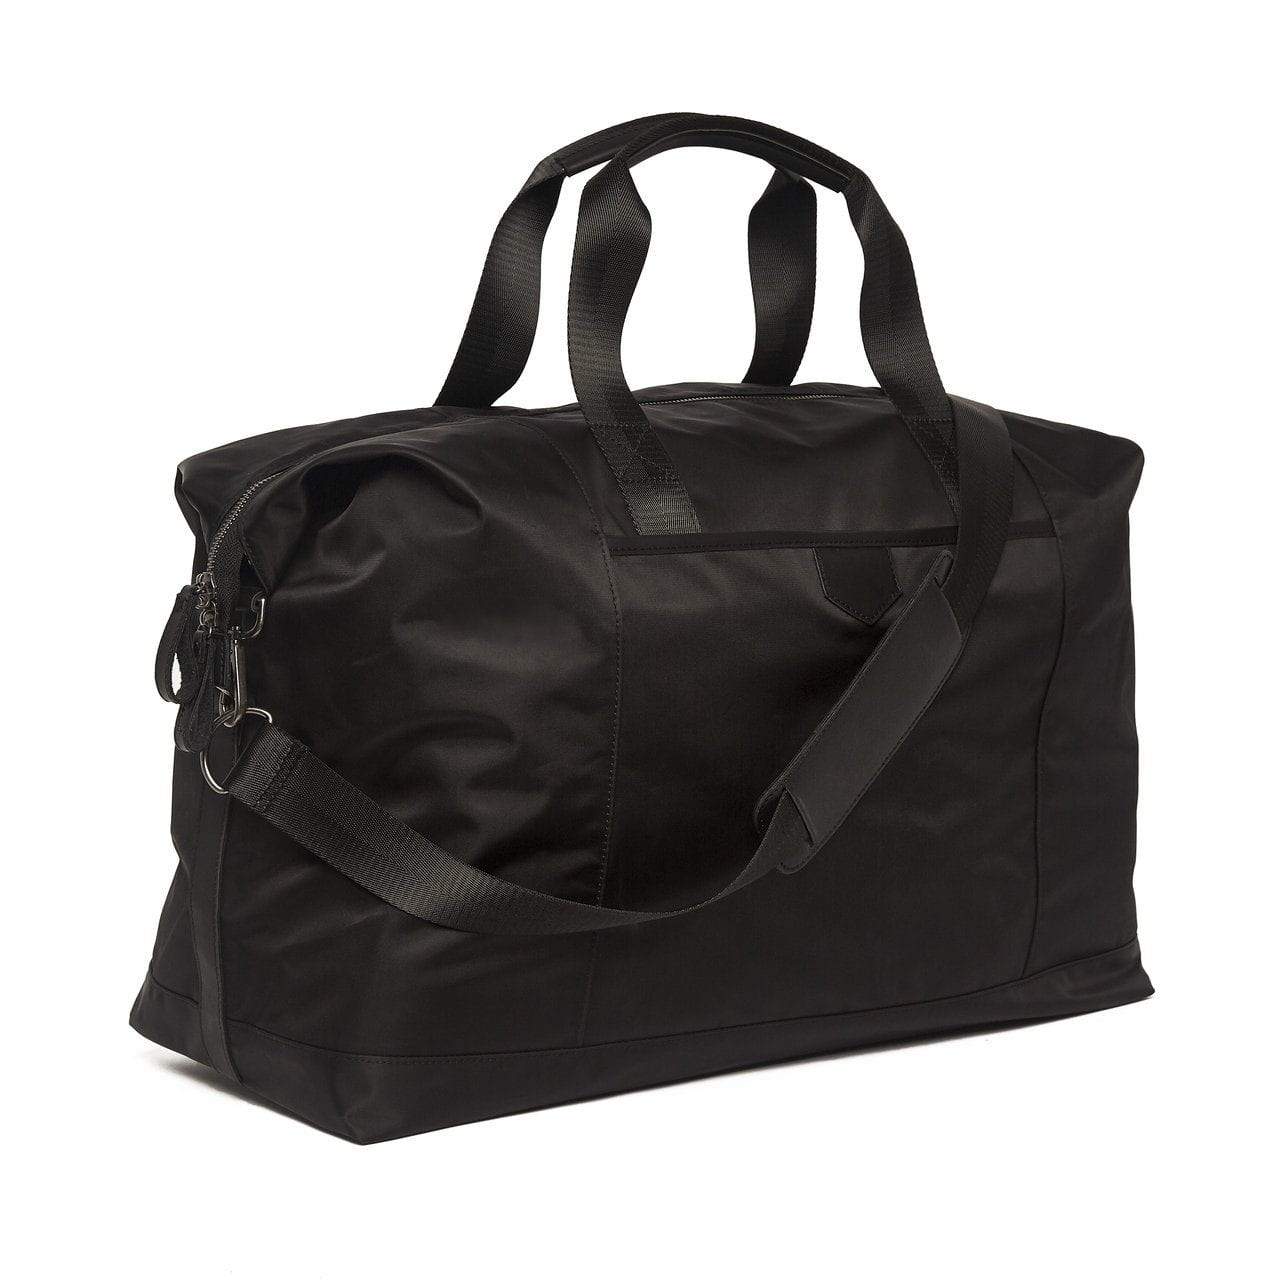 Brouk & Co Handbags The Omega Weekender Bag, Black